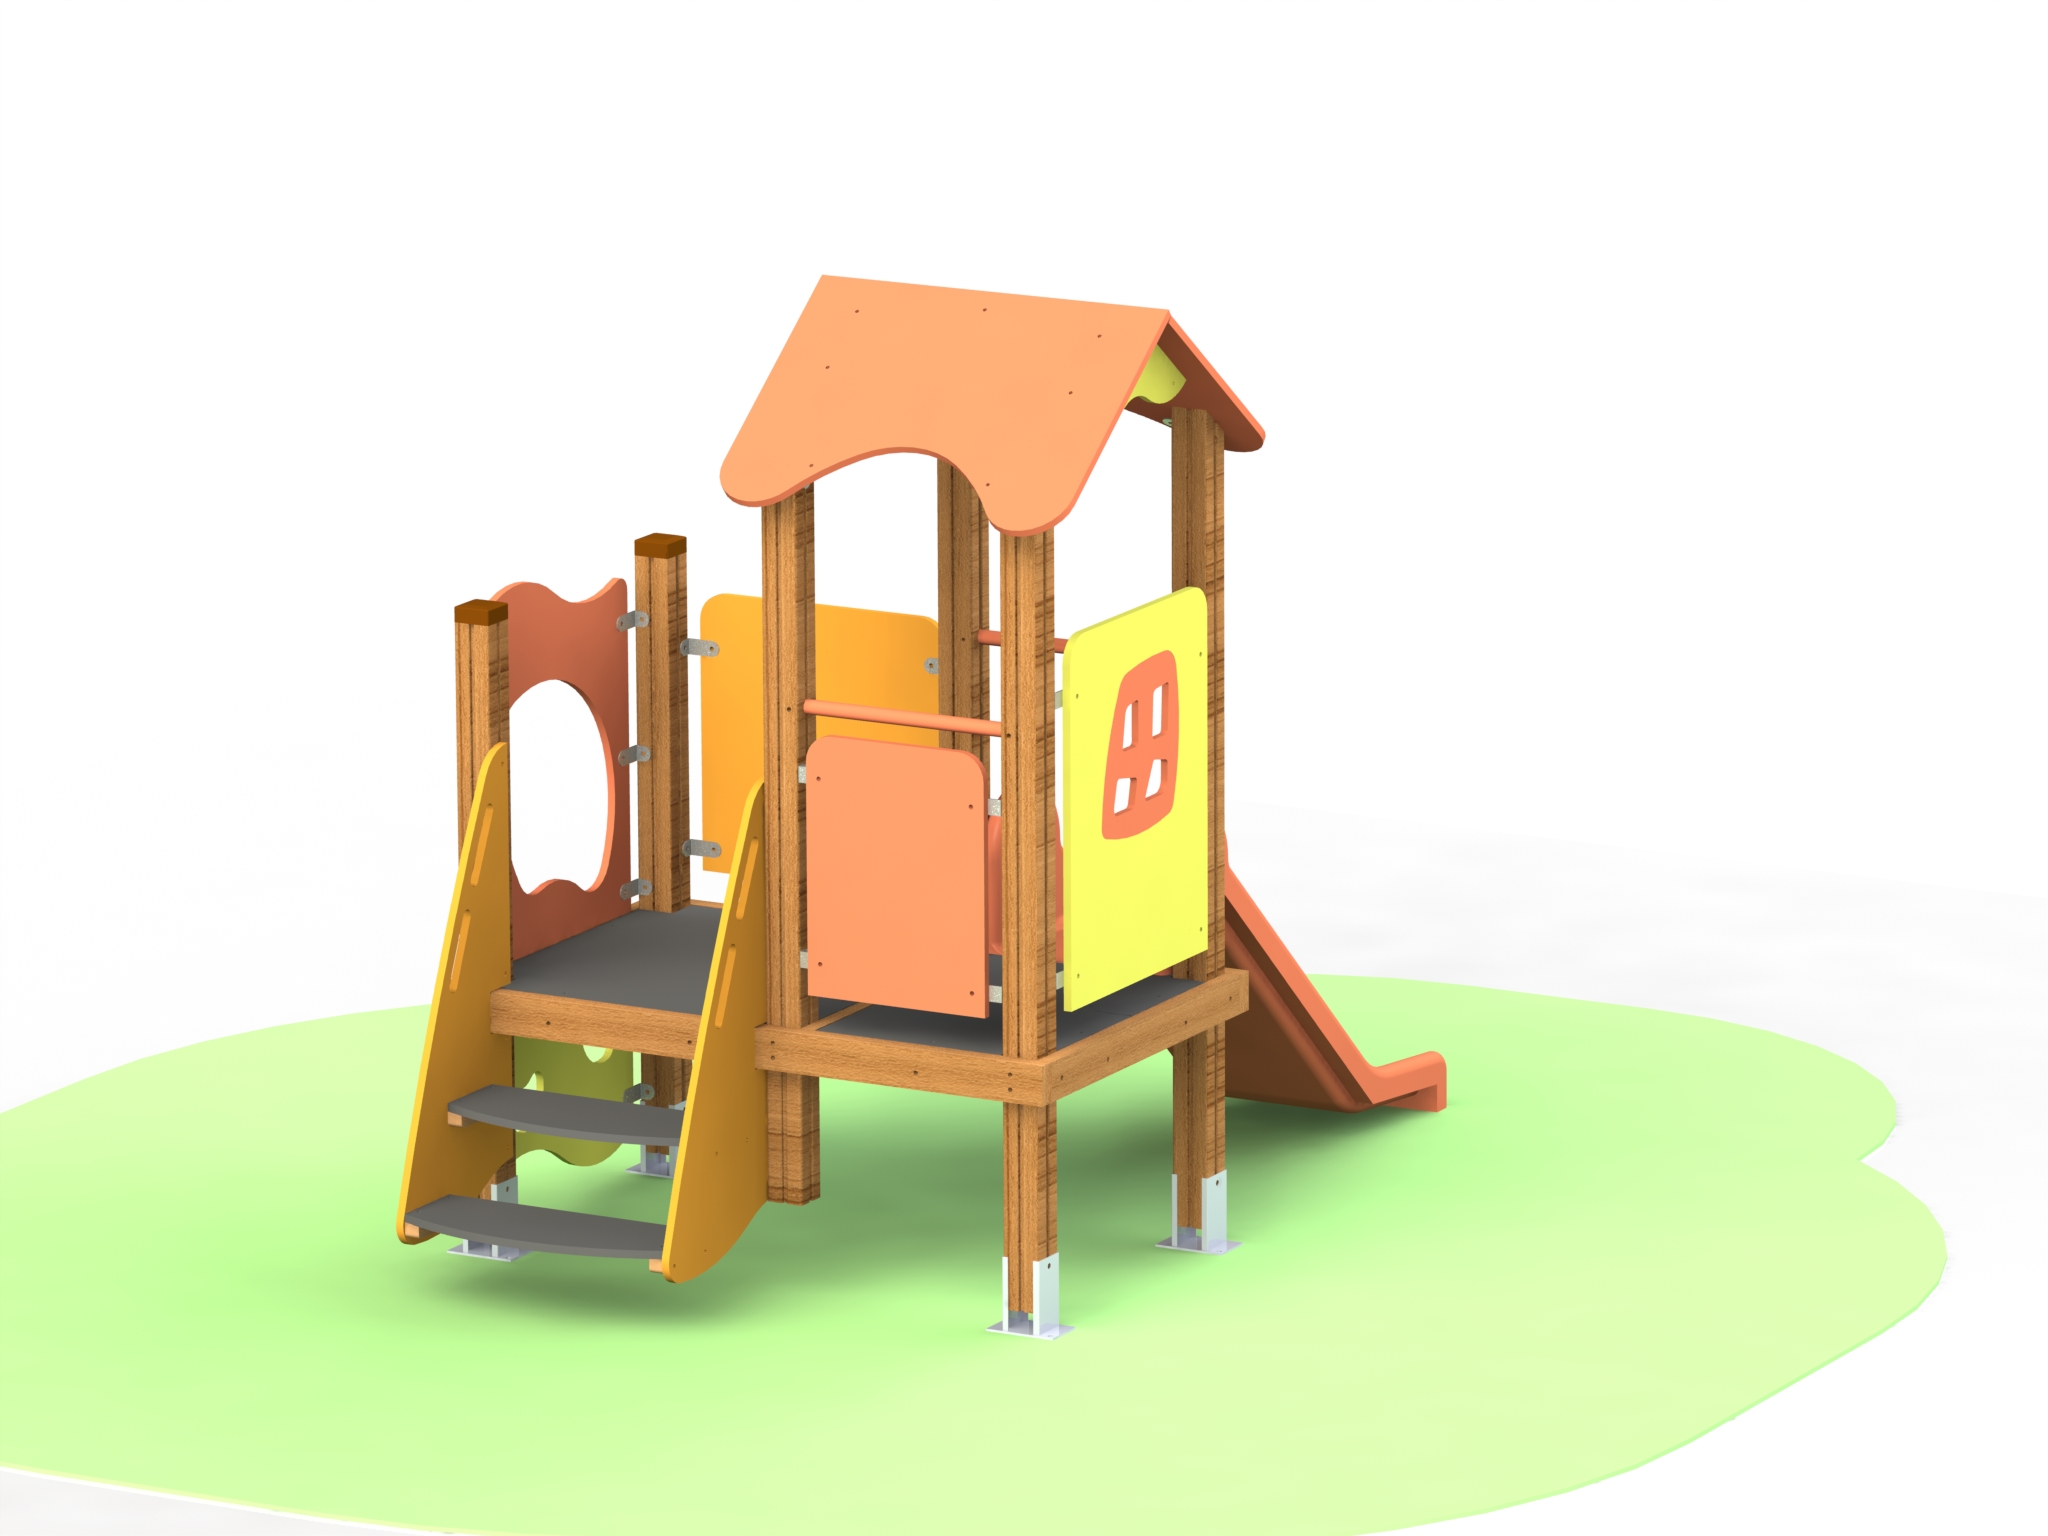 Combined playground equipment, model КД69